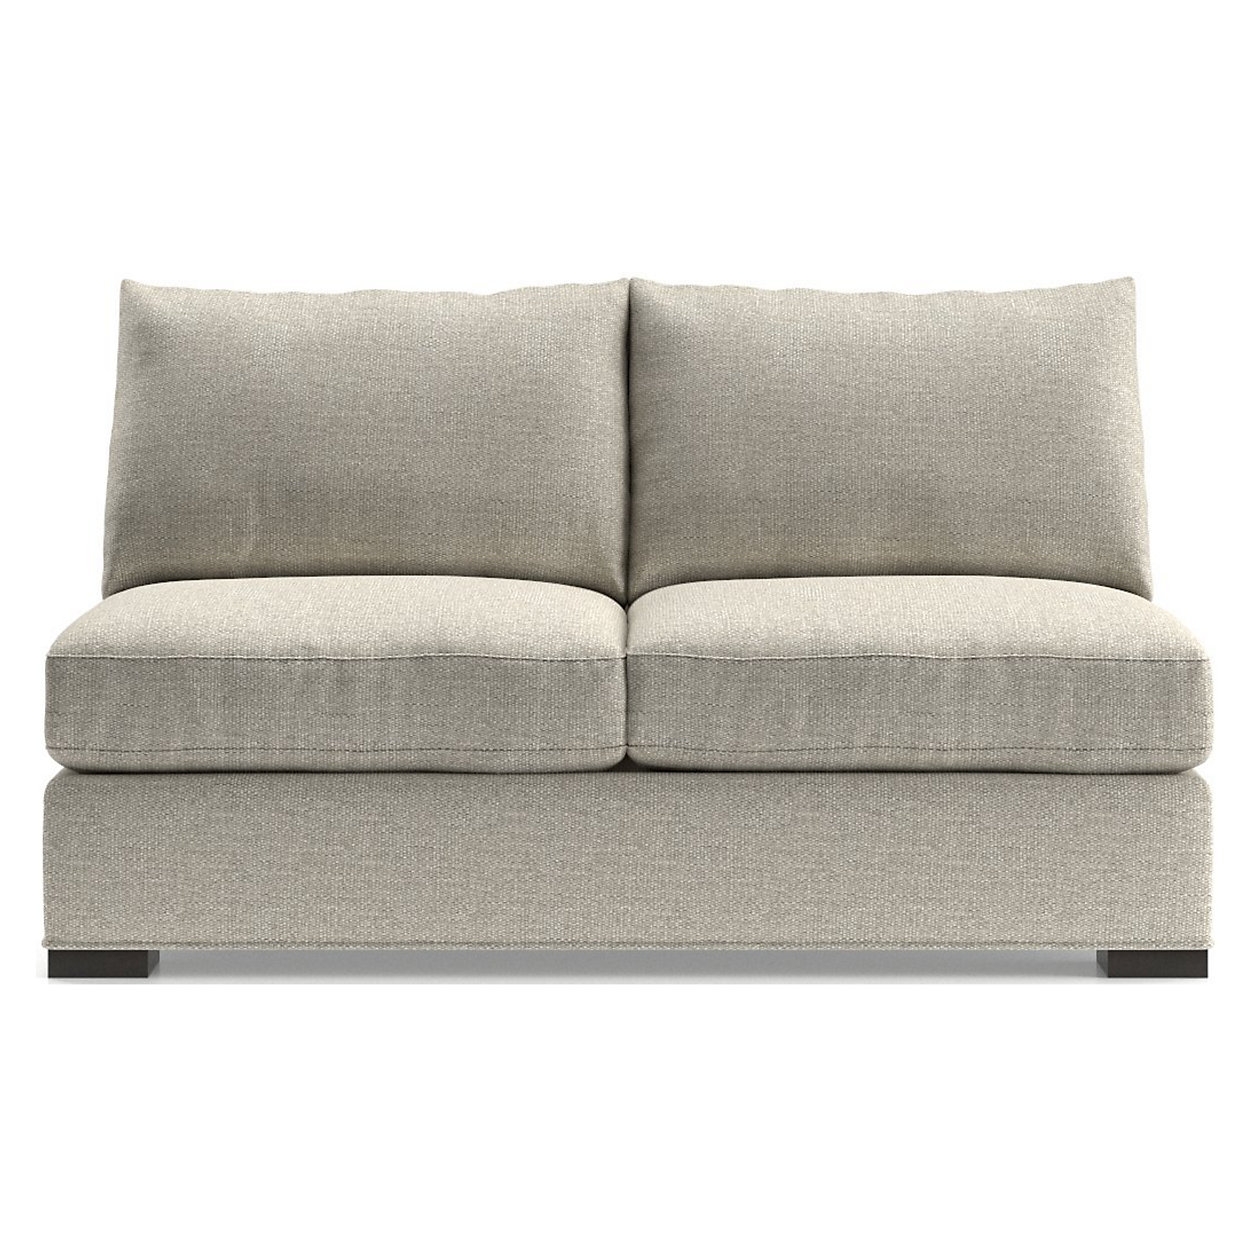 Axis Armless Full Sleeper Sofa - Image 0